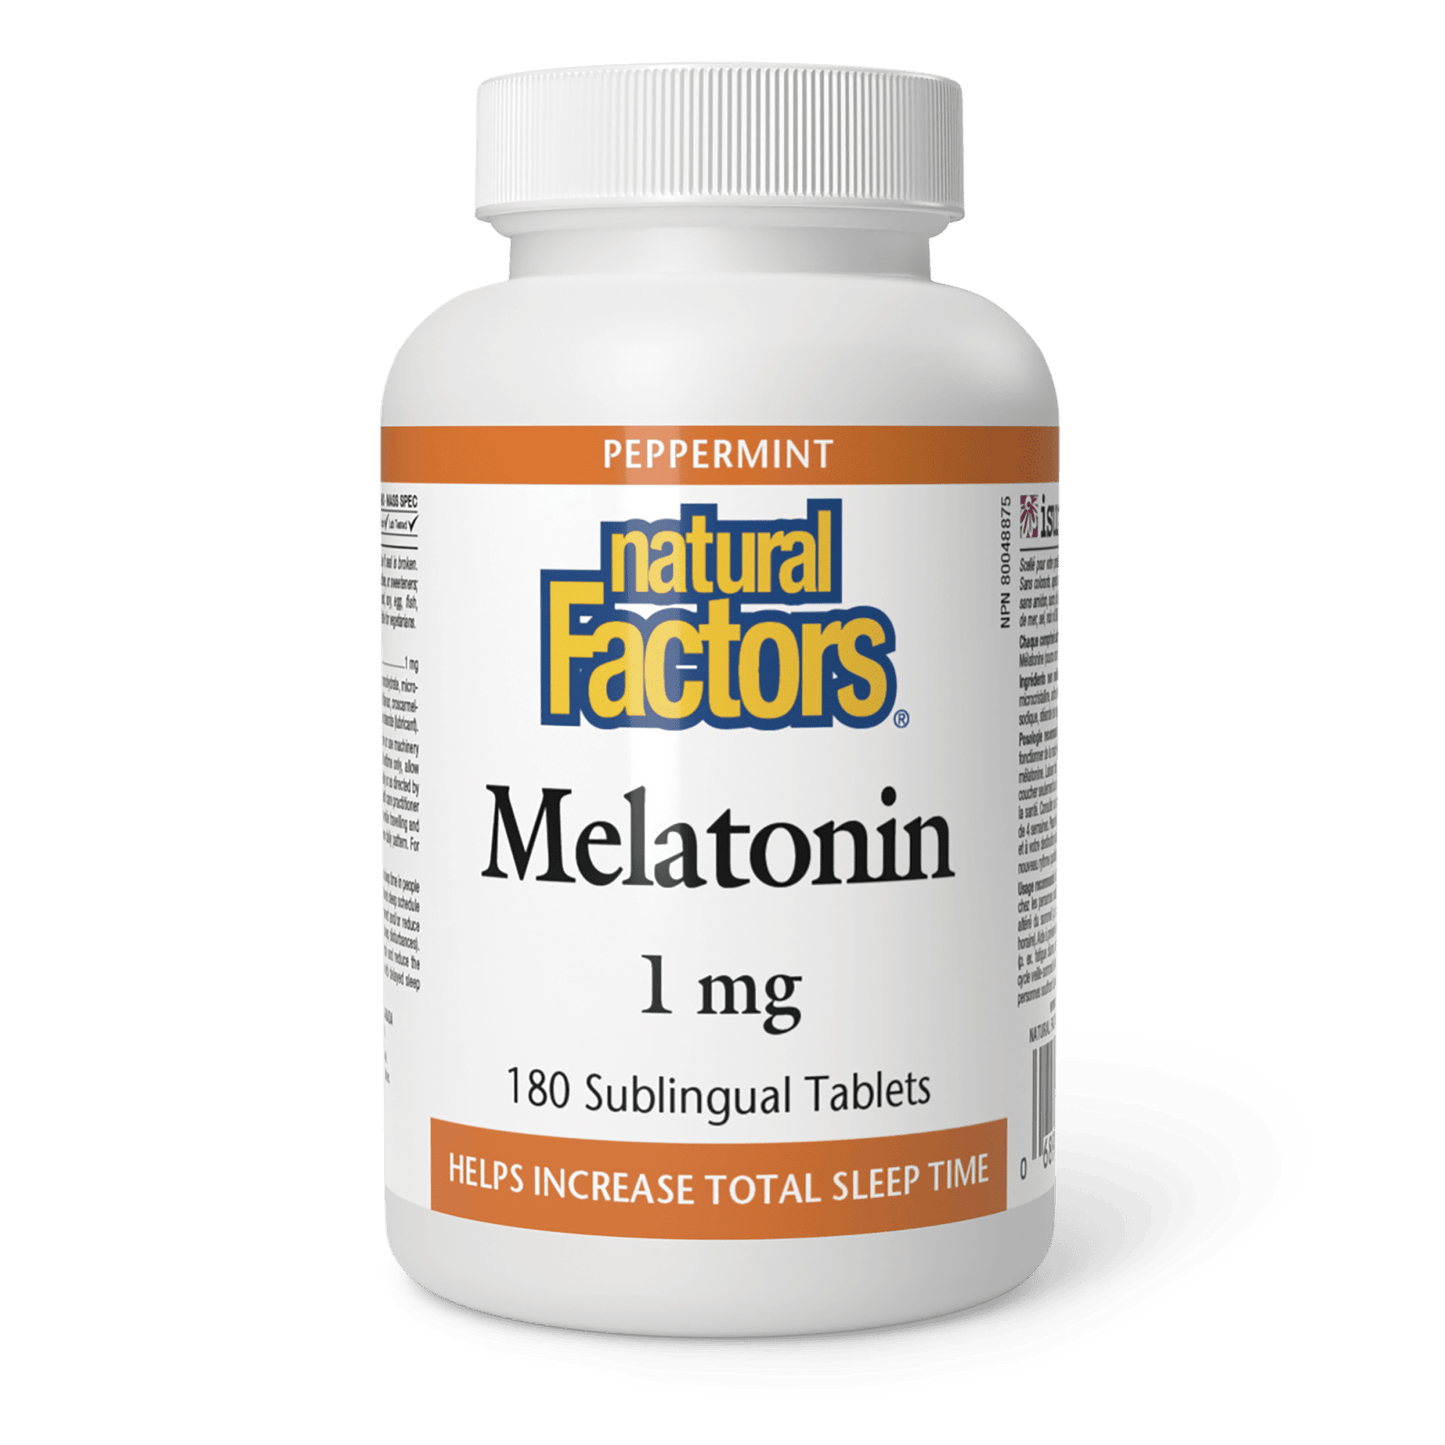 Melatonin 1 mg, Peppermint, Natural Factors|v|image|2714